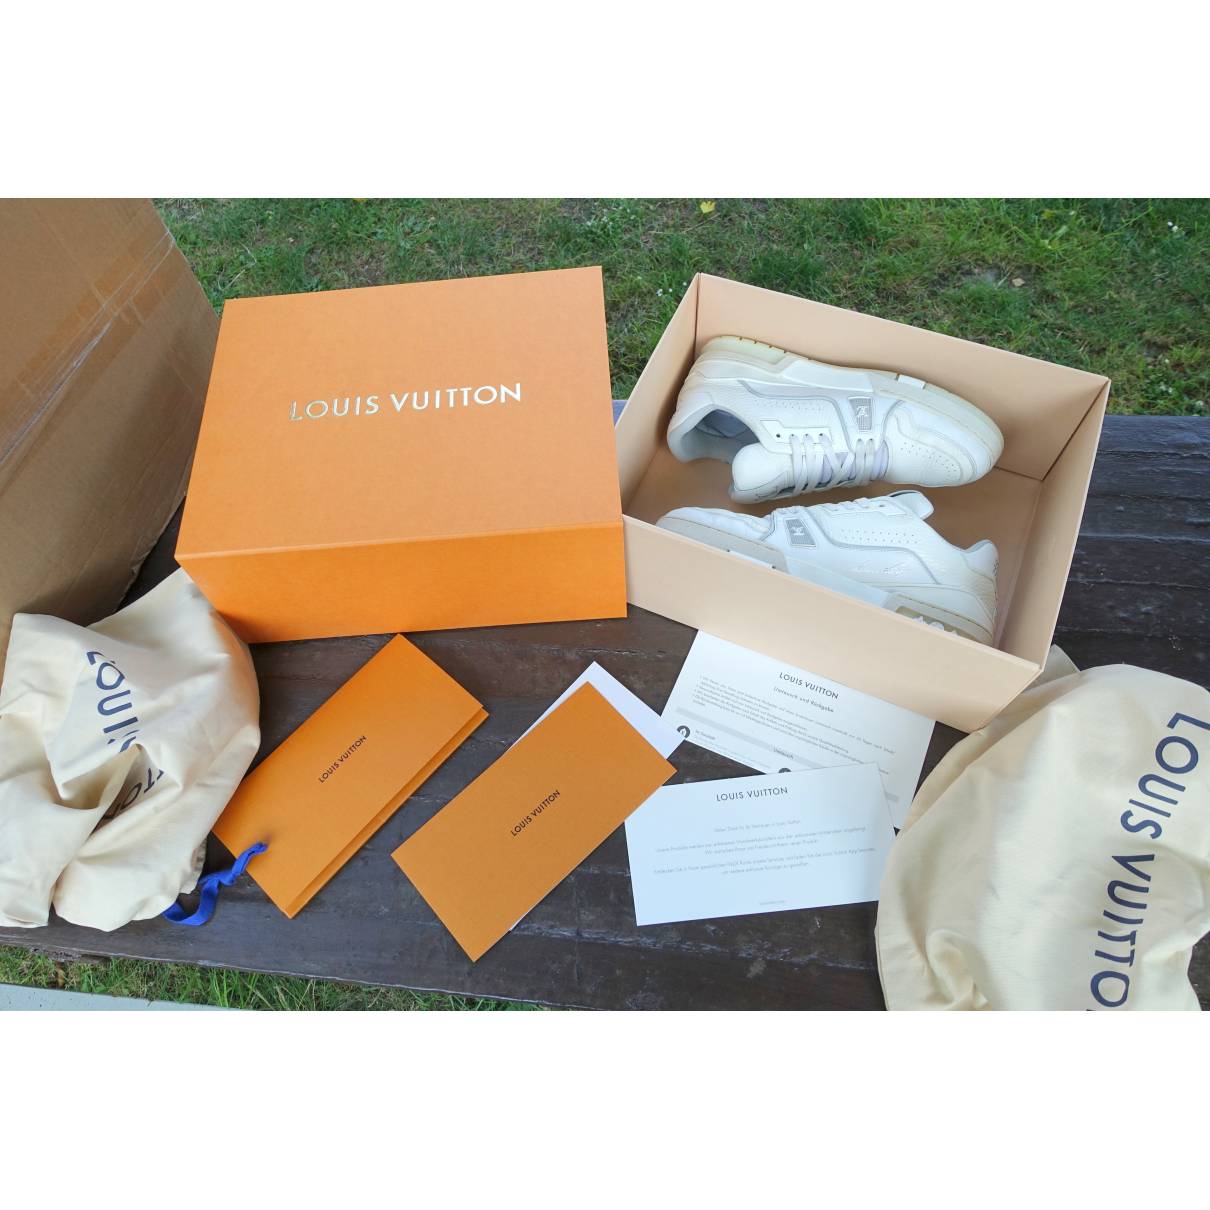 lv shoe box